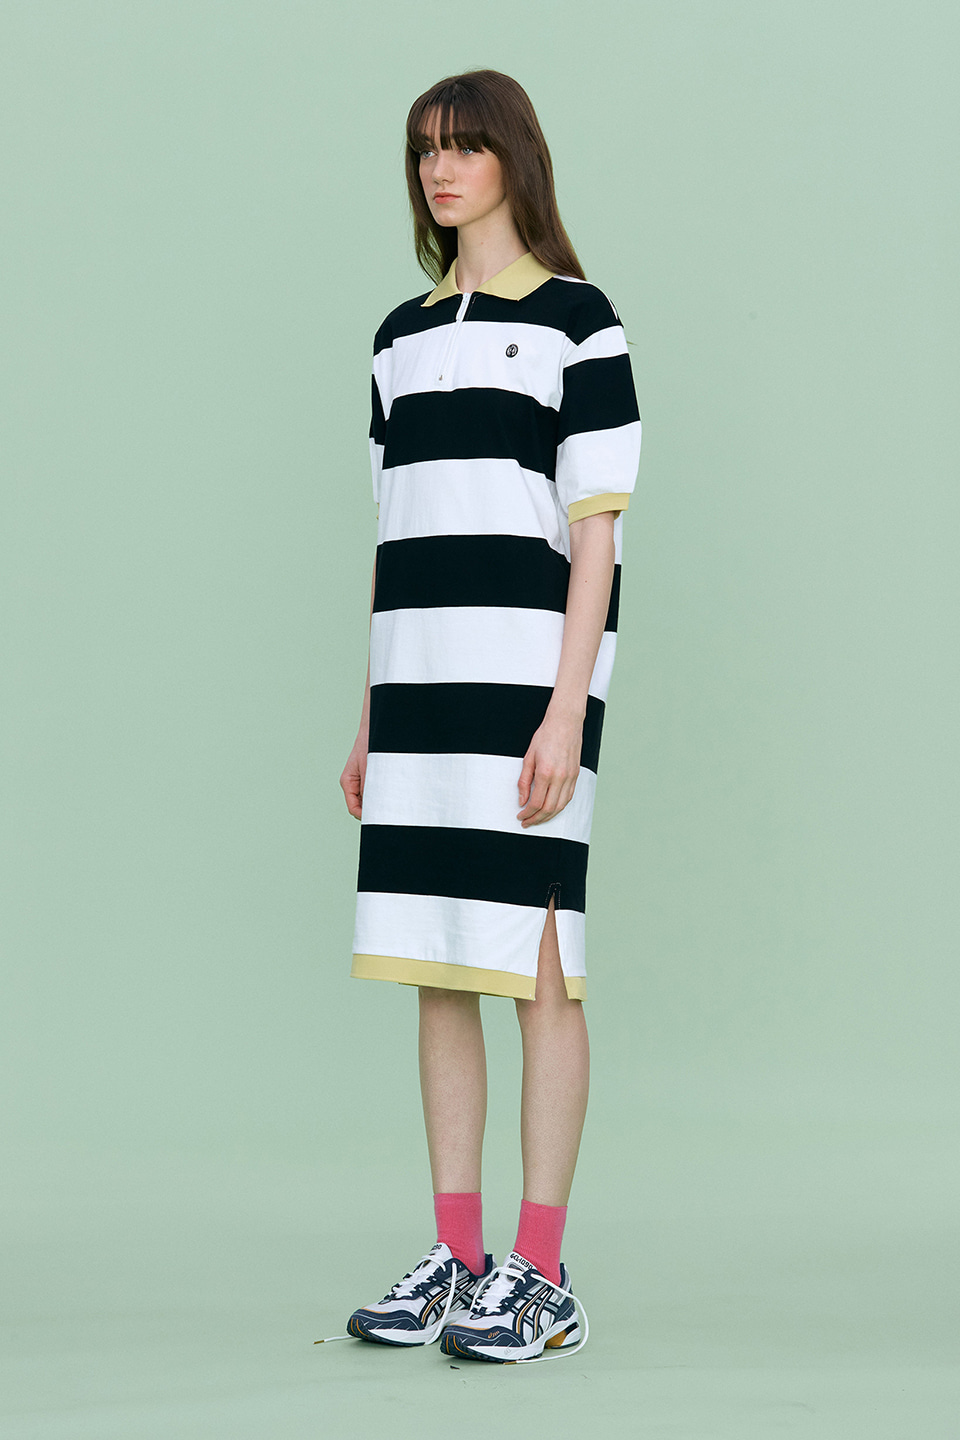 Striped Jersey Dress_BLACK